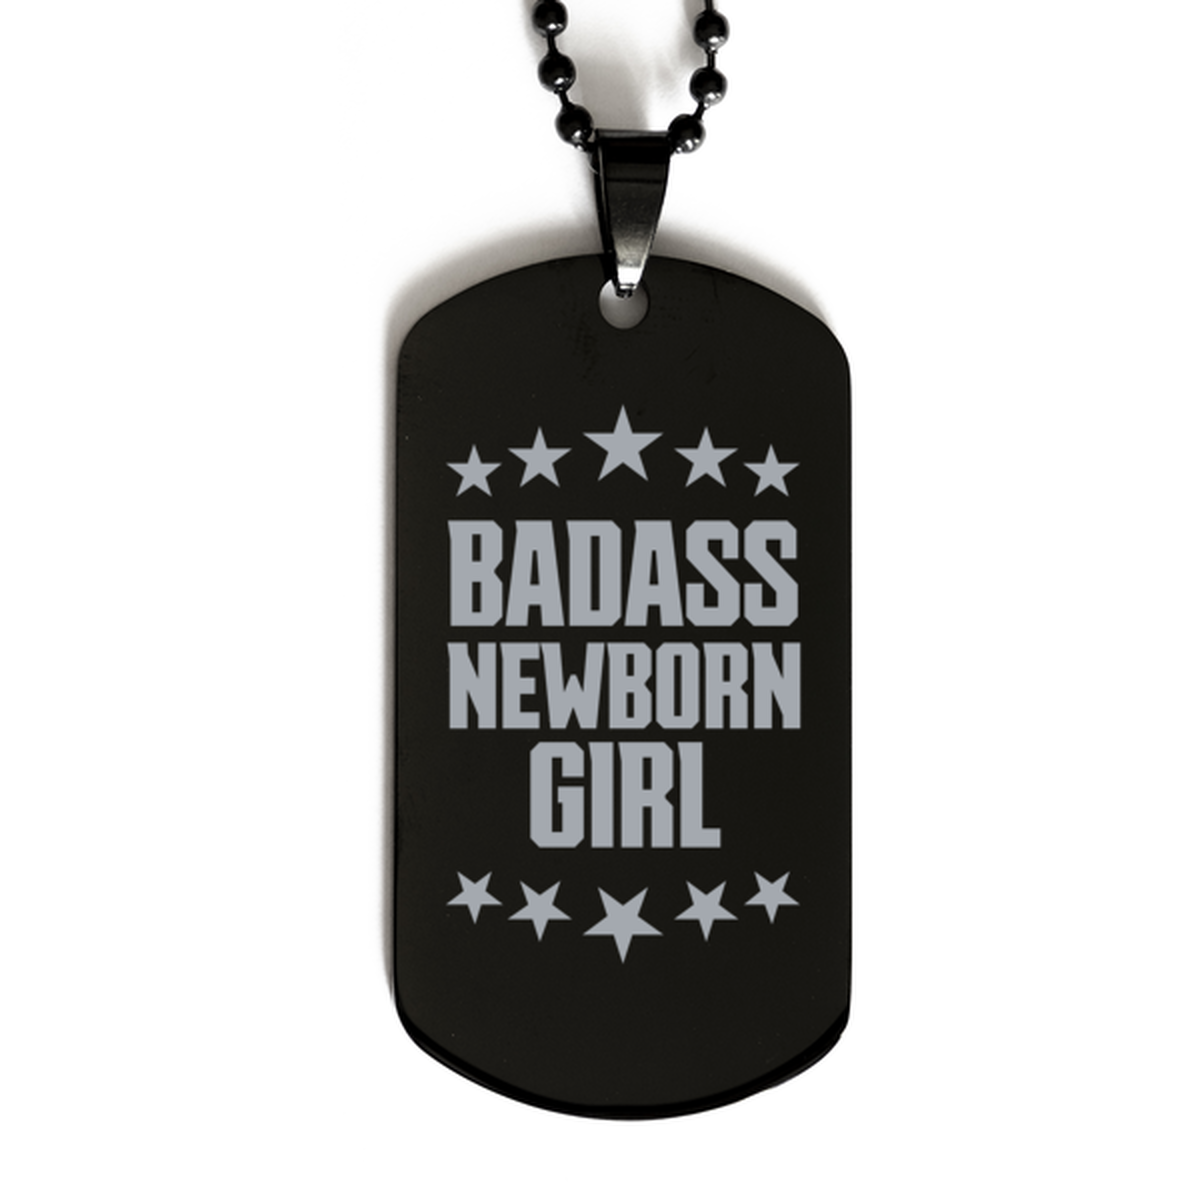 Newborn girl Black Dog Tag, Badass Newborn girl, Funny Family Gifts  Necklace For Newborn girl From Dad Mom